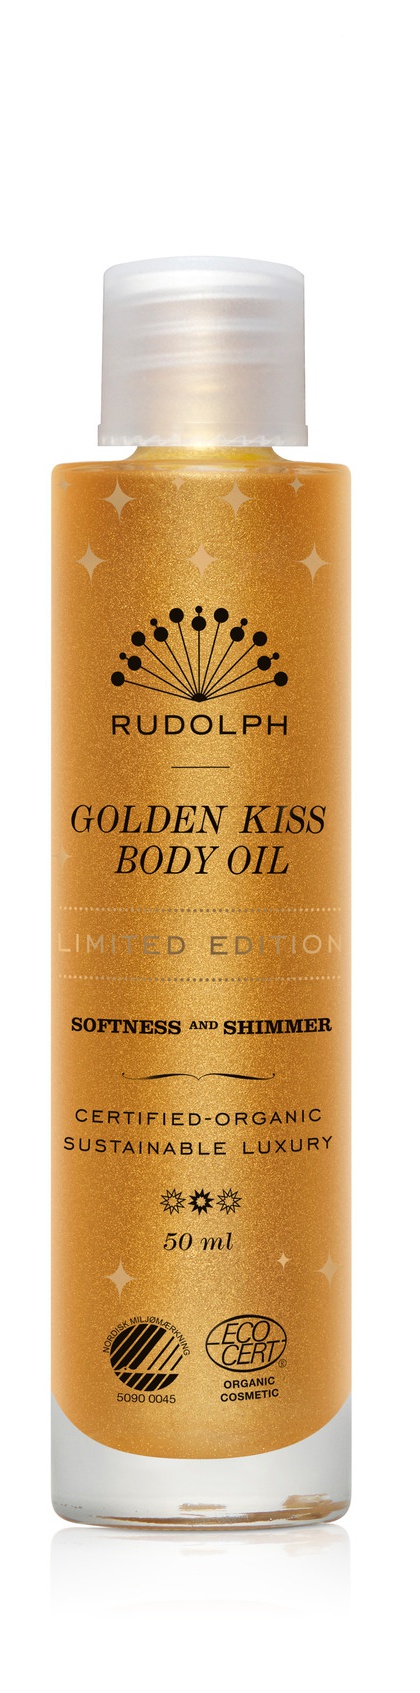 Rudolph Care Golden Kiss Body Oil